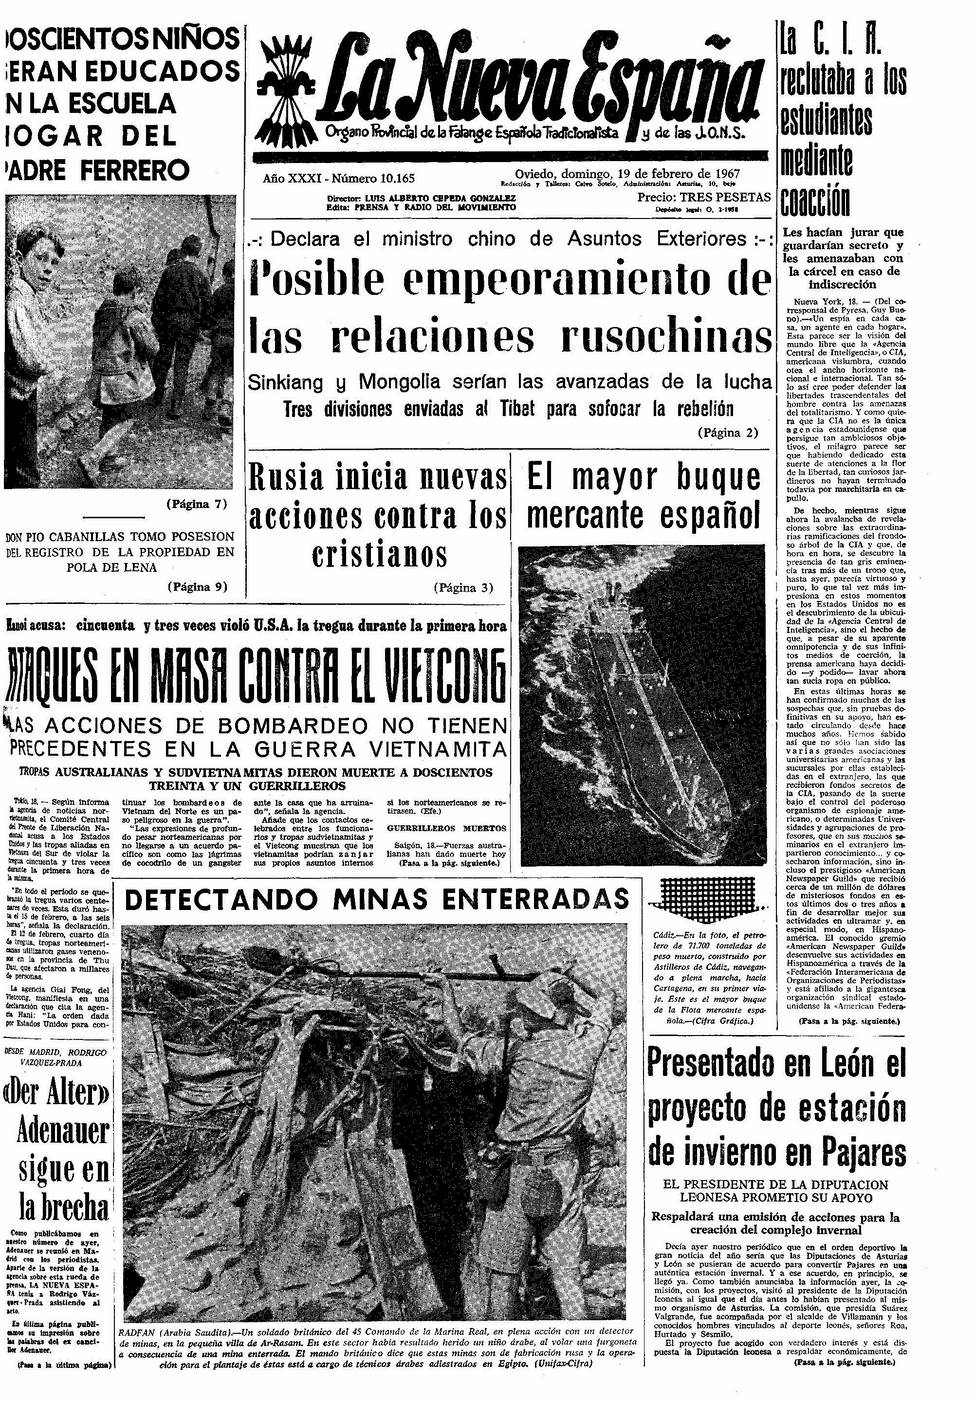 Portada del Domingo, 19 de Febrero de 1967